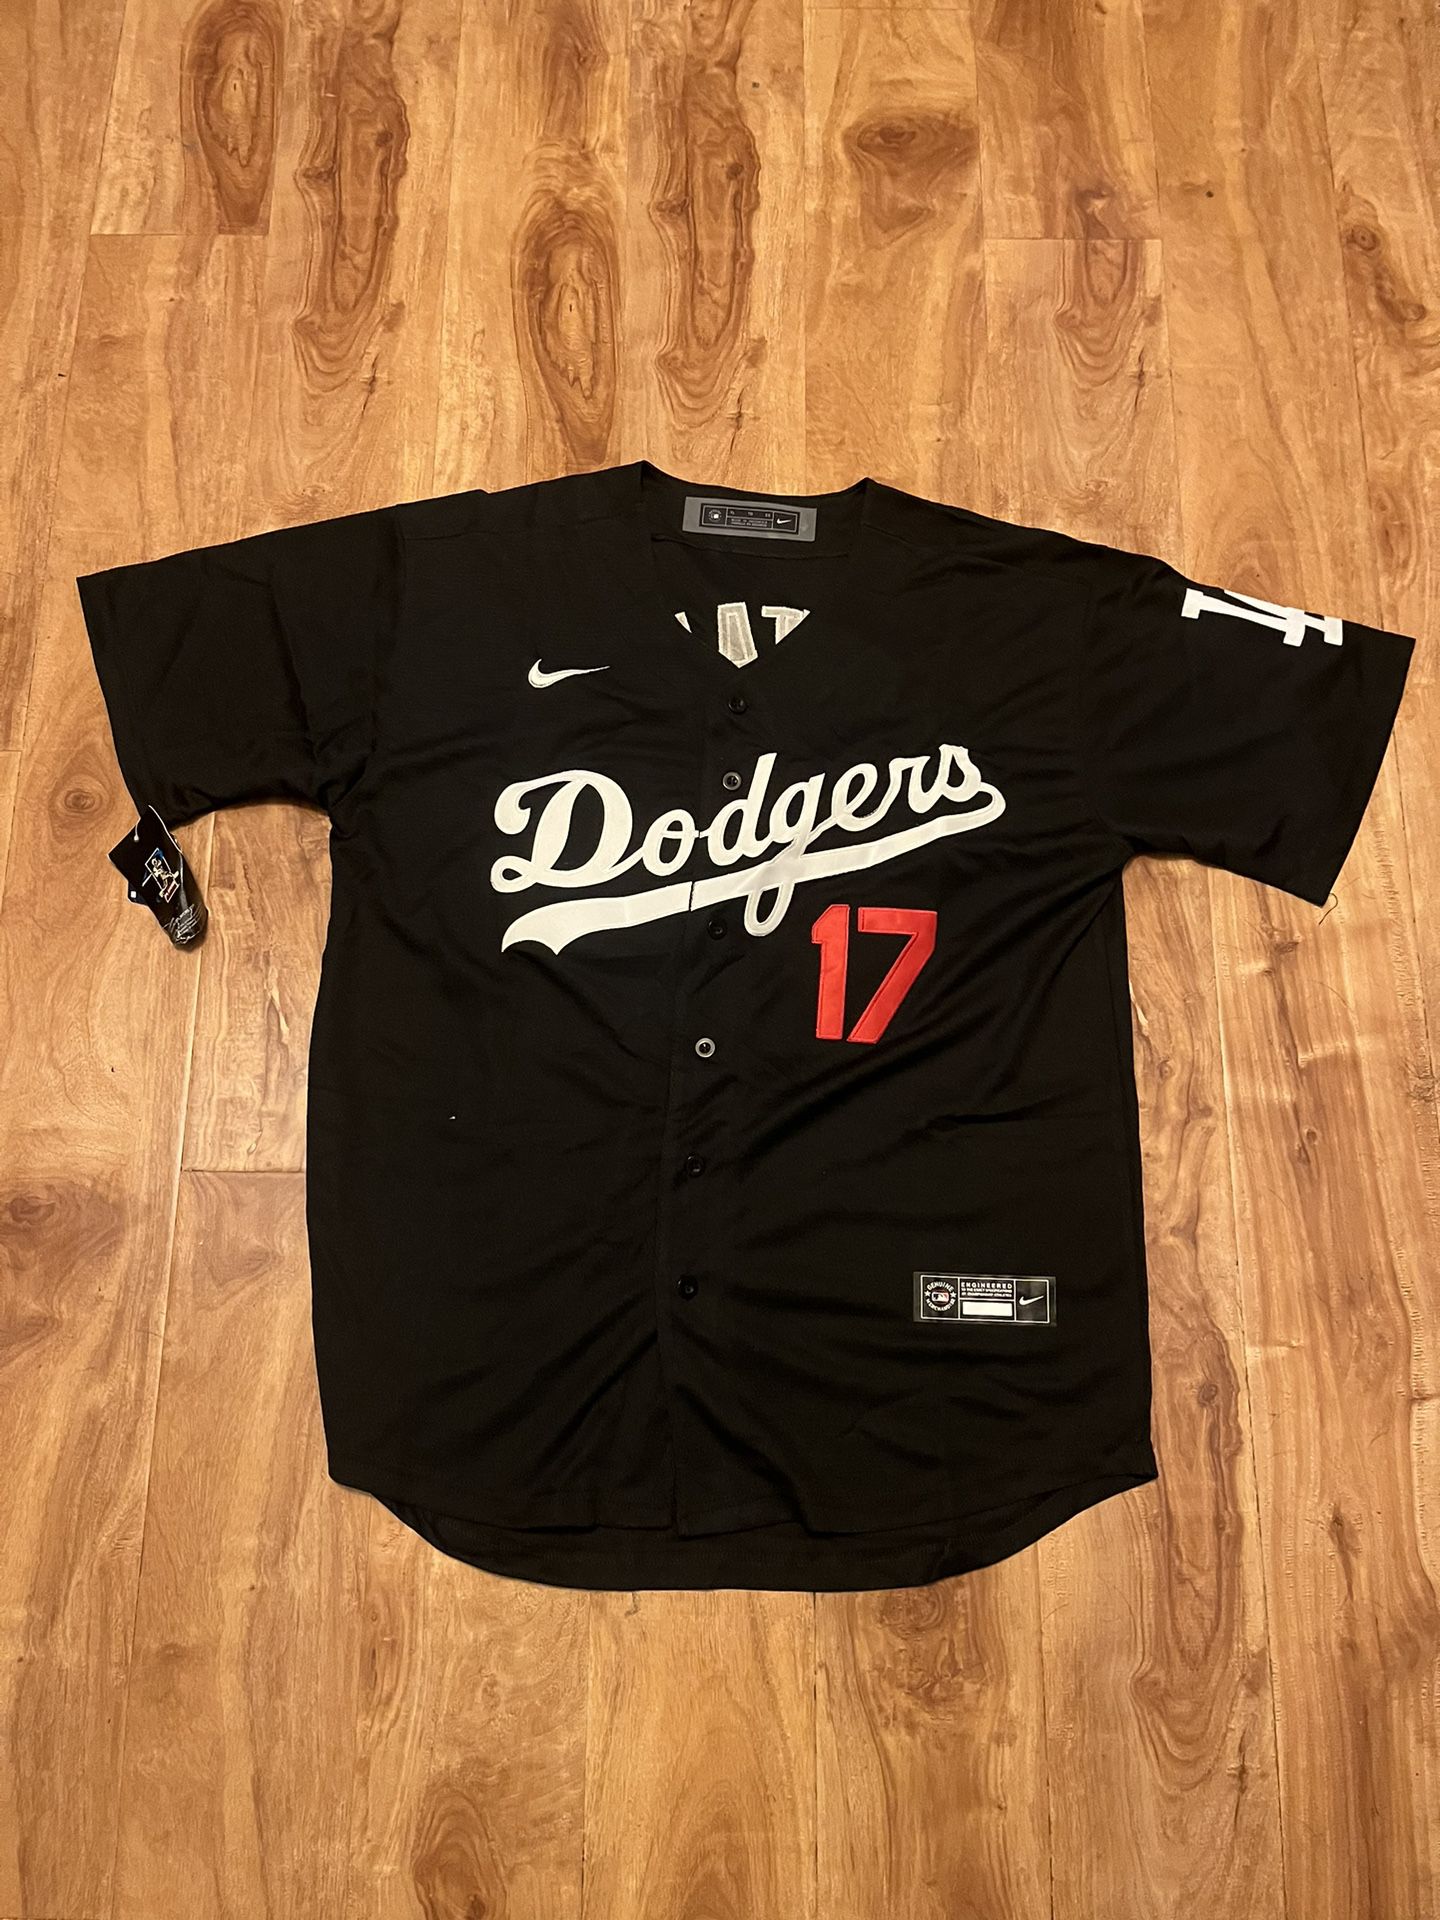 Dodgers Ohtani #17 Jersey Black